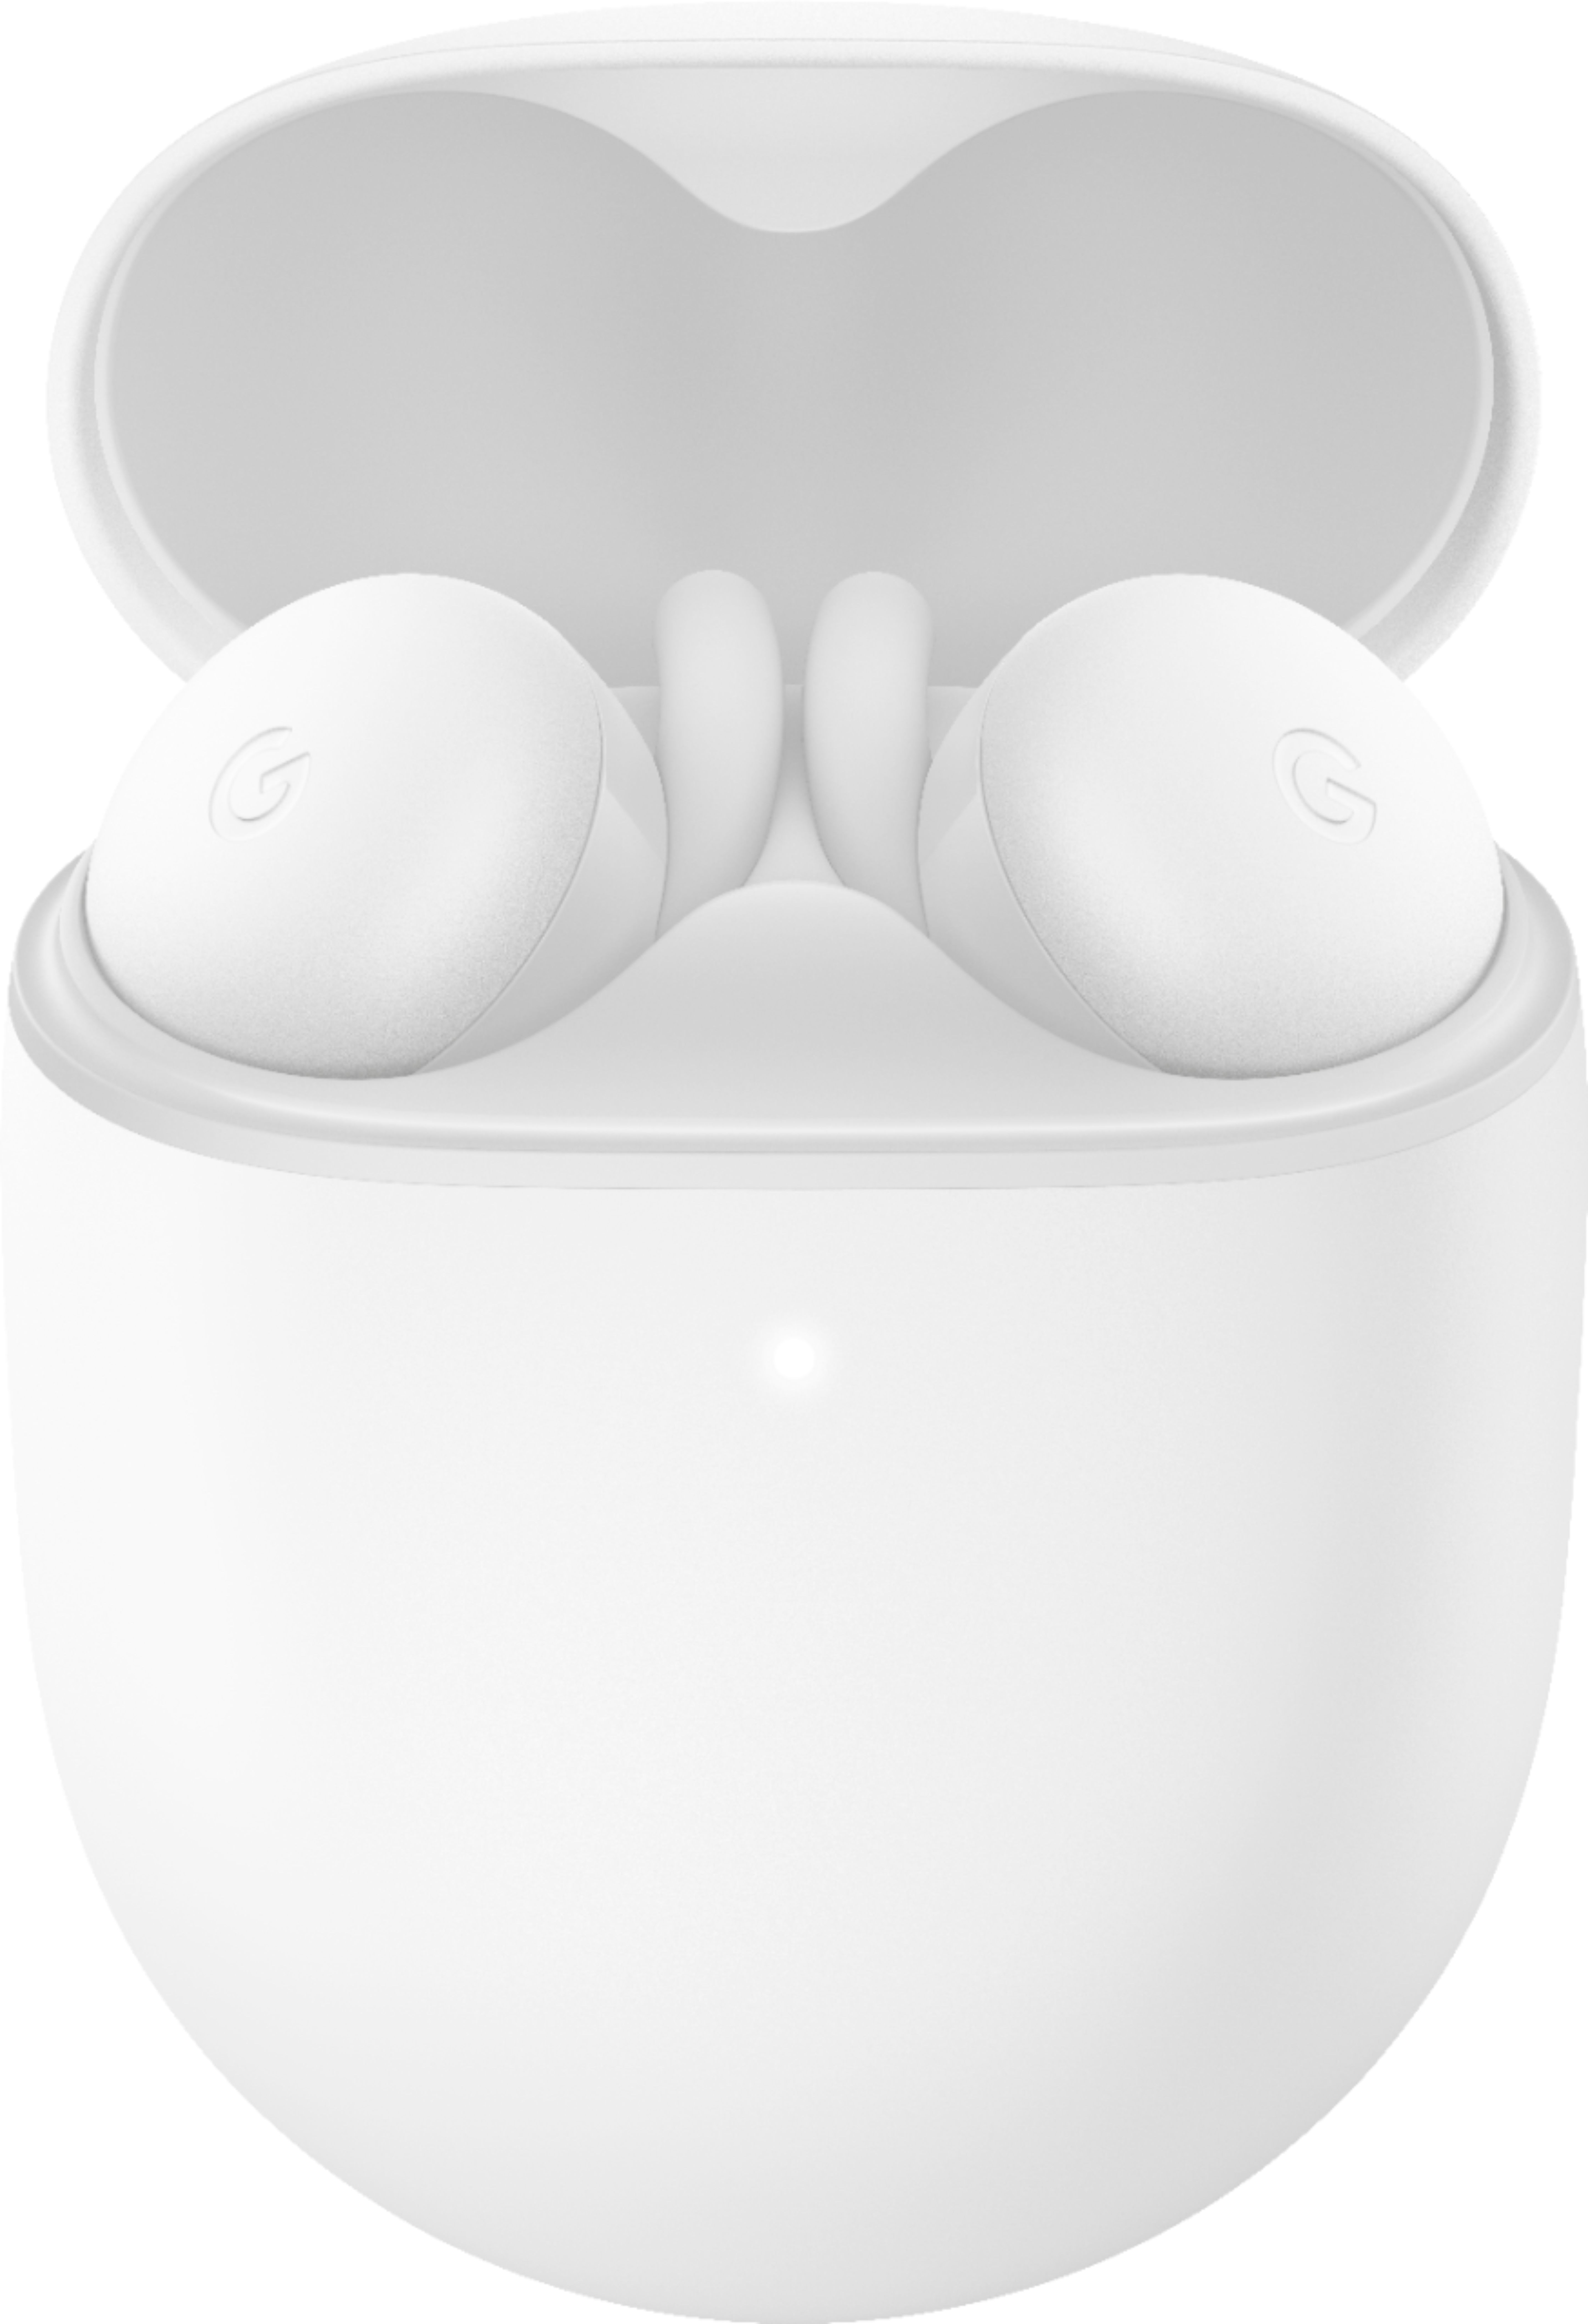 Google - Pixel Buds A-Series True Wireless In-Ear Headphones - Clearly White